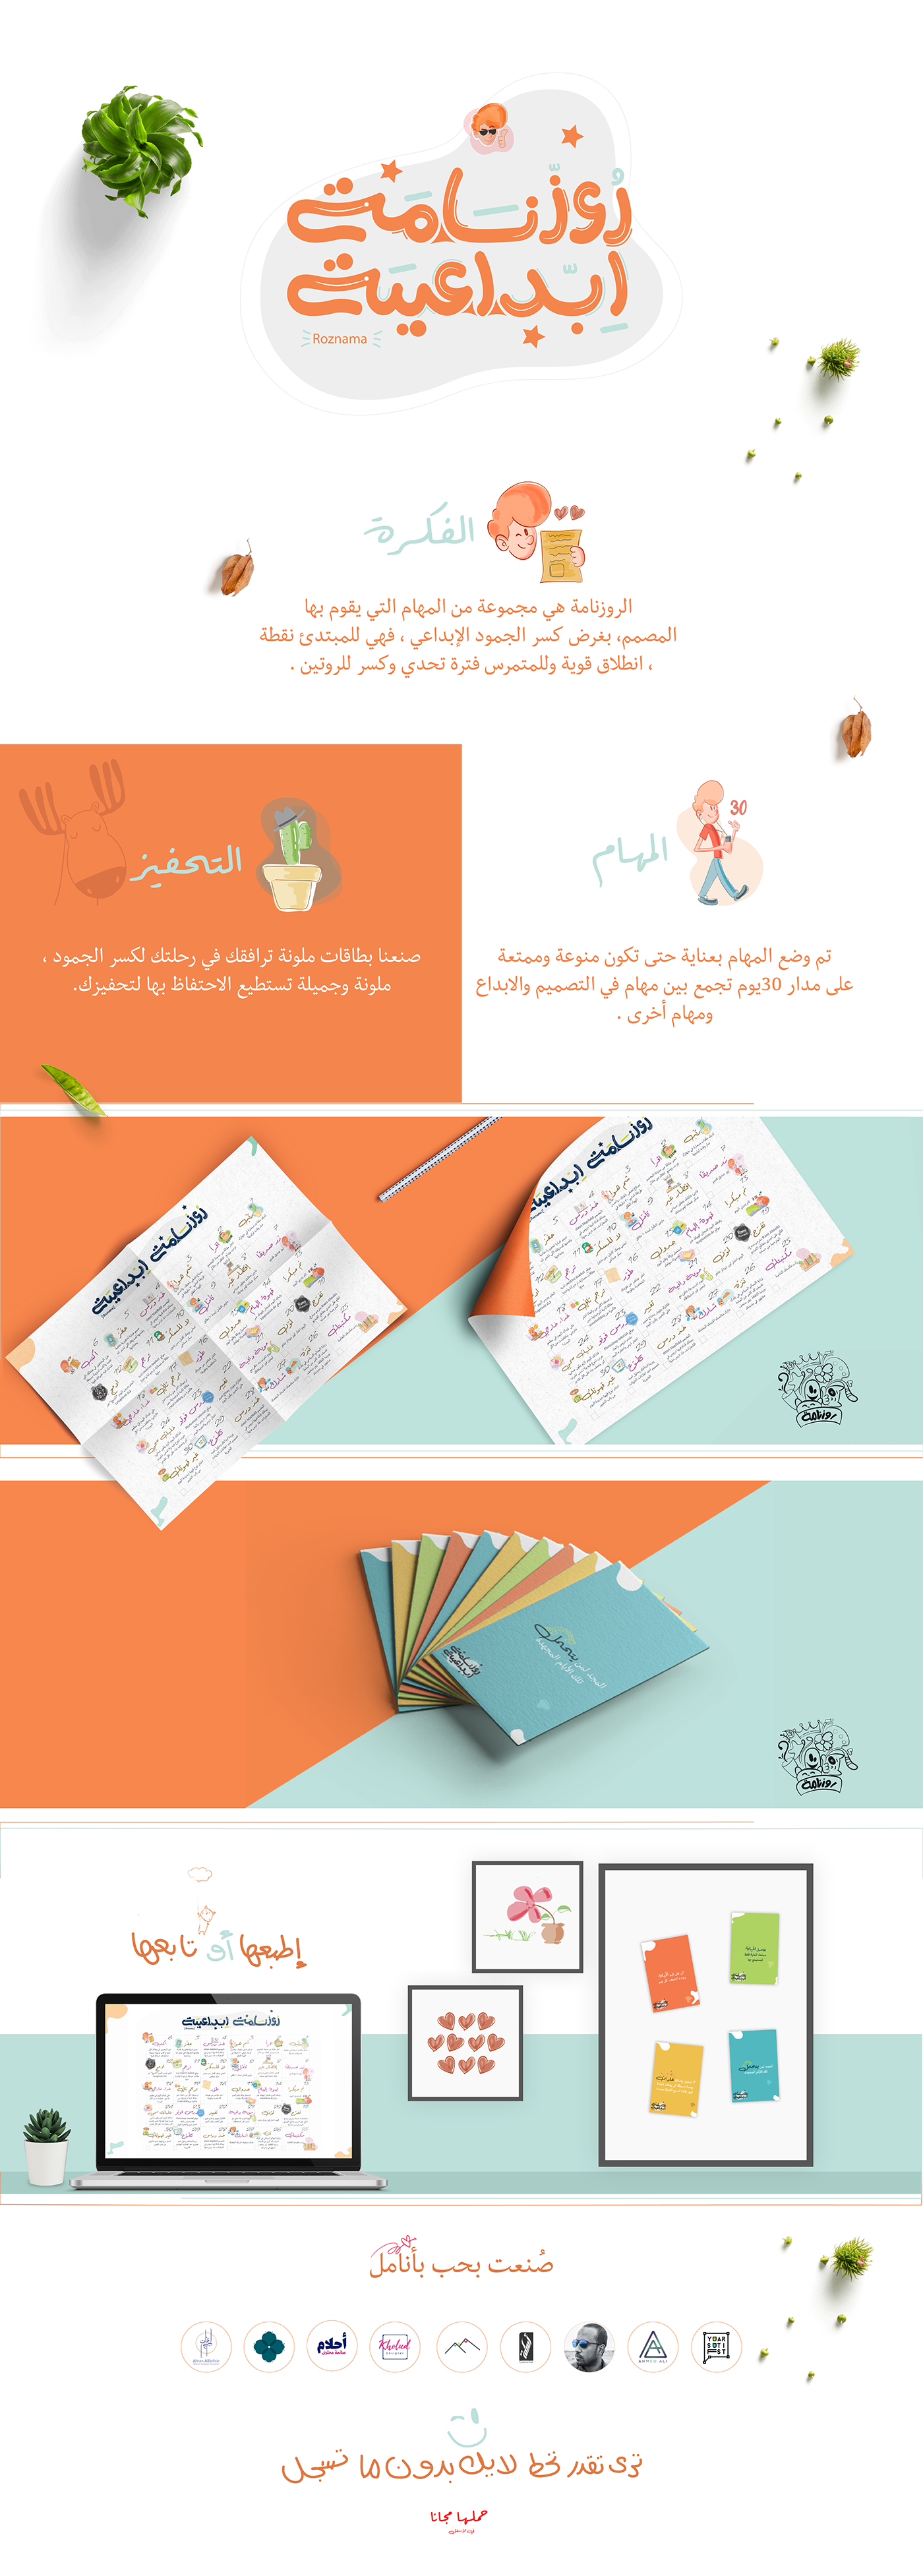 creative free print design Arab روزنامة روزنامة إبداعية جمال إبداع مصممين